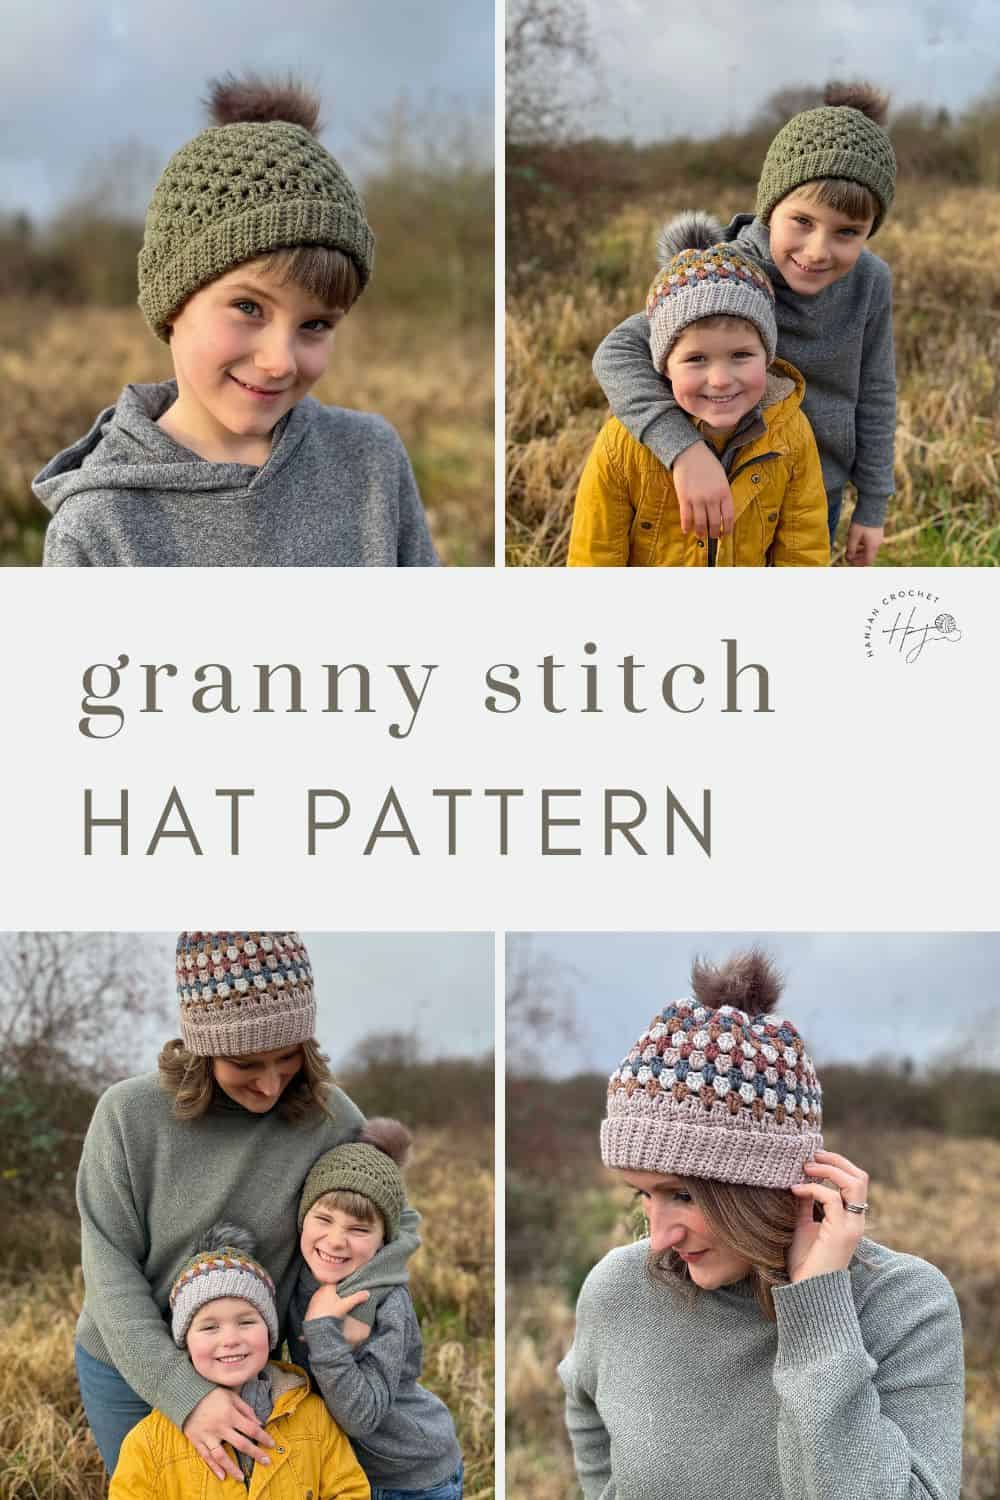 Granny stitch hat pattern.